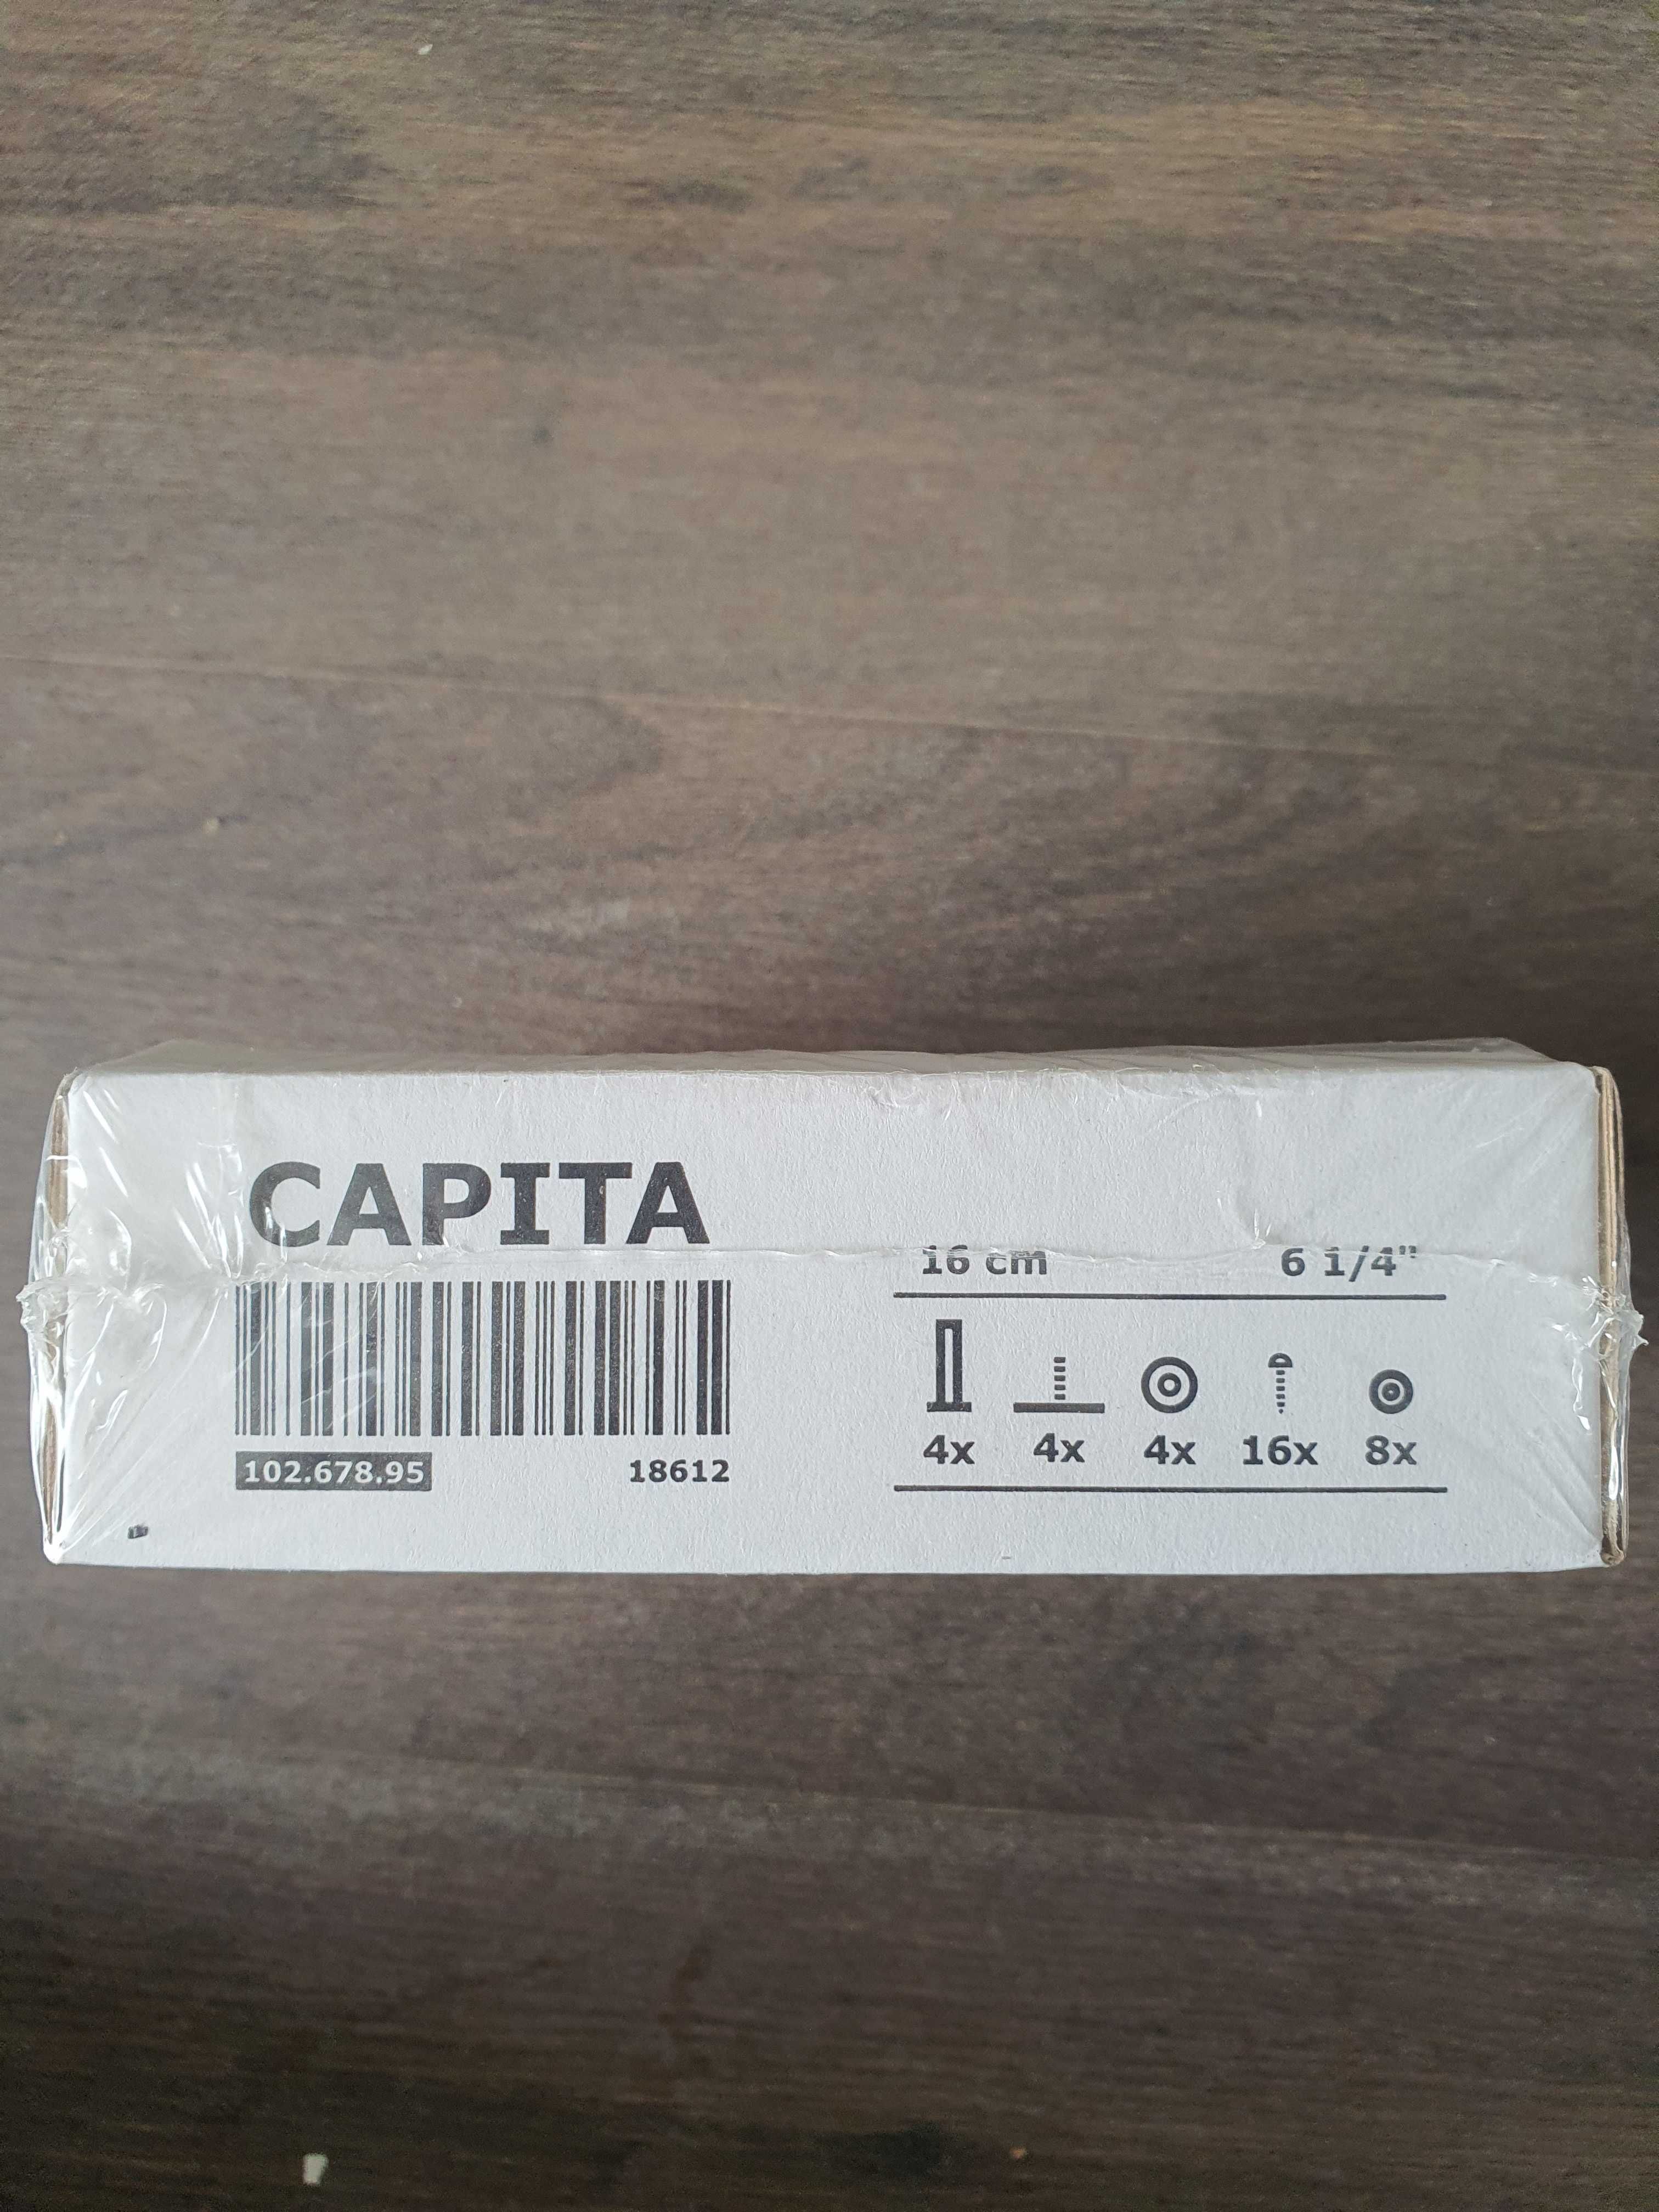 IKEA Noga CAPITA ze stali nierdzewnej; regulowana